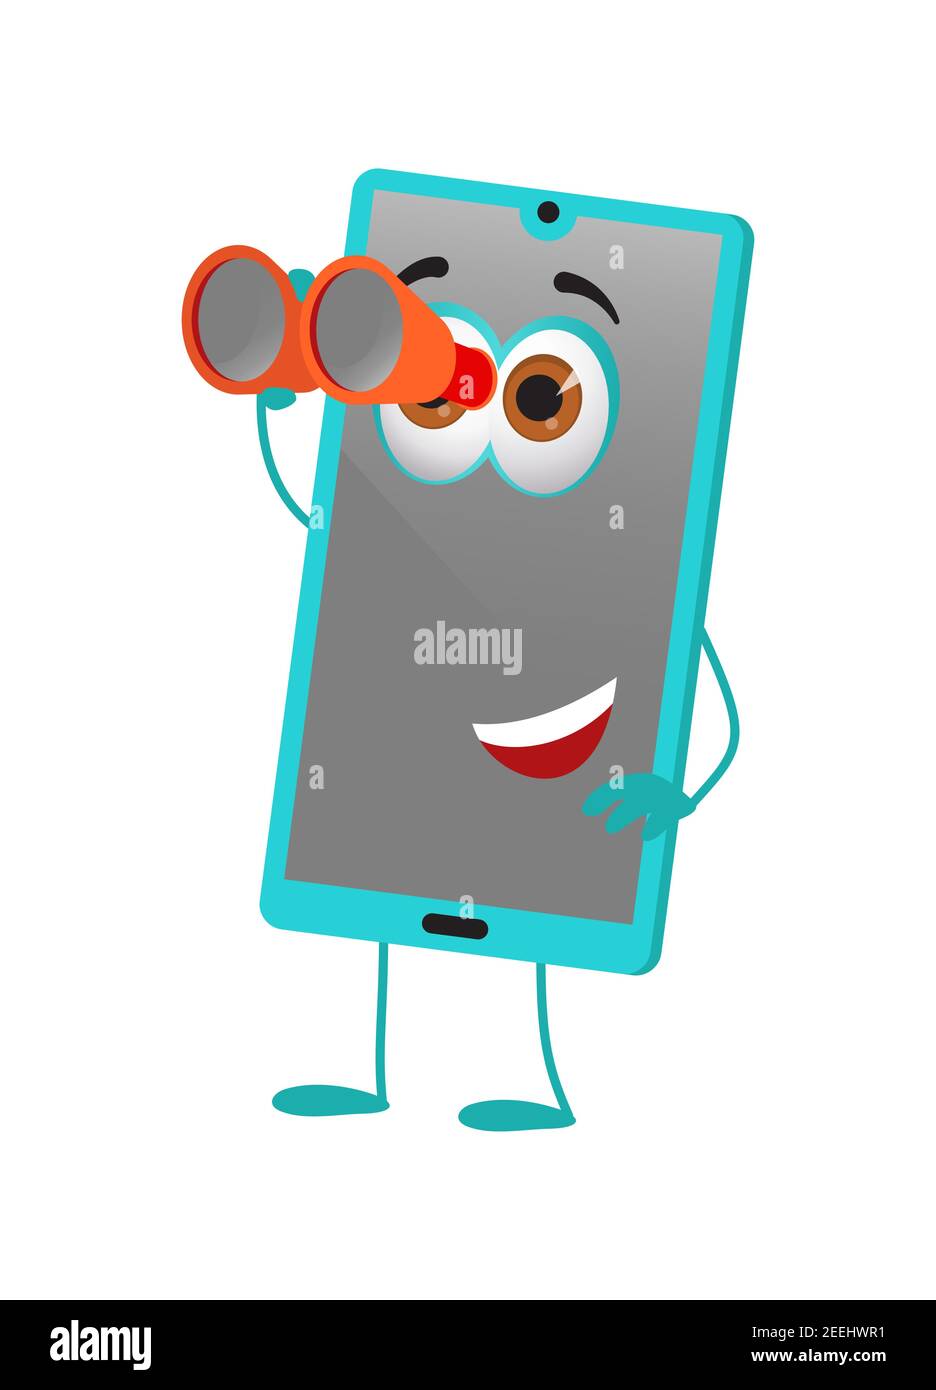 Funny travel Objects Kollektion: Funny Smart Phone mit Fernglas auf weißem Hintergrund, flache Design-Vektor-Illustration Stock Vektor